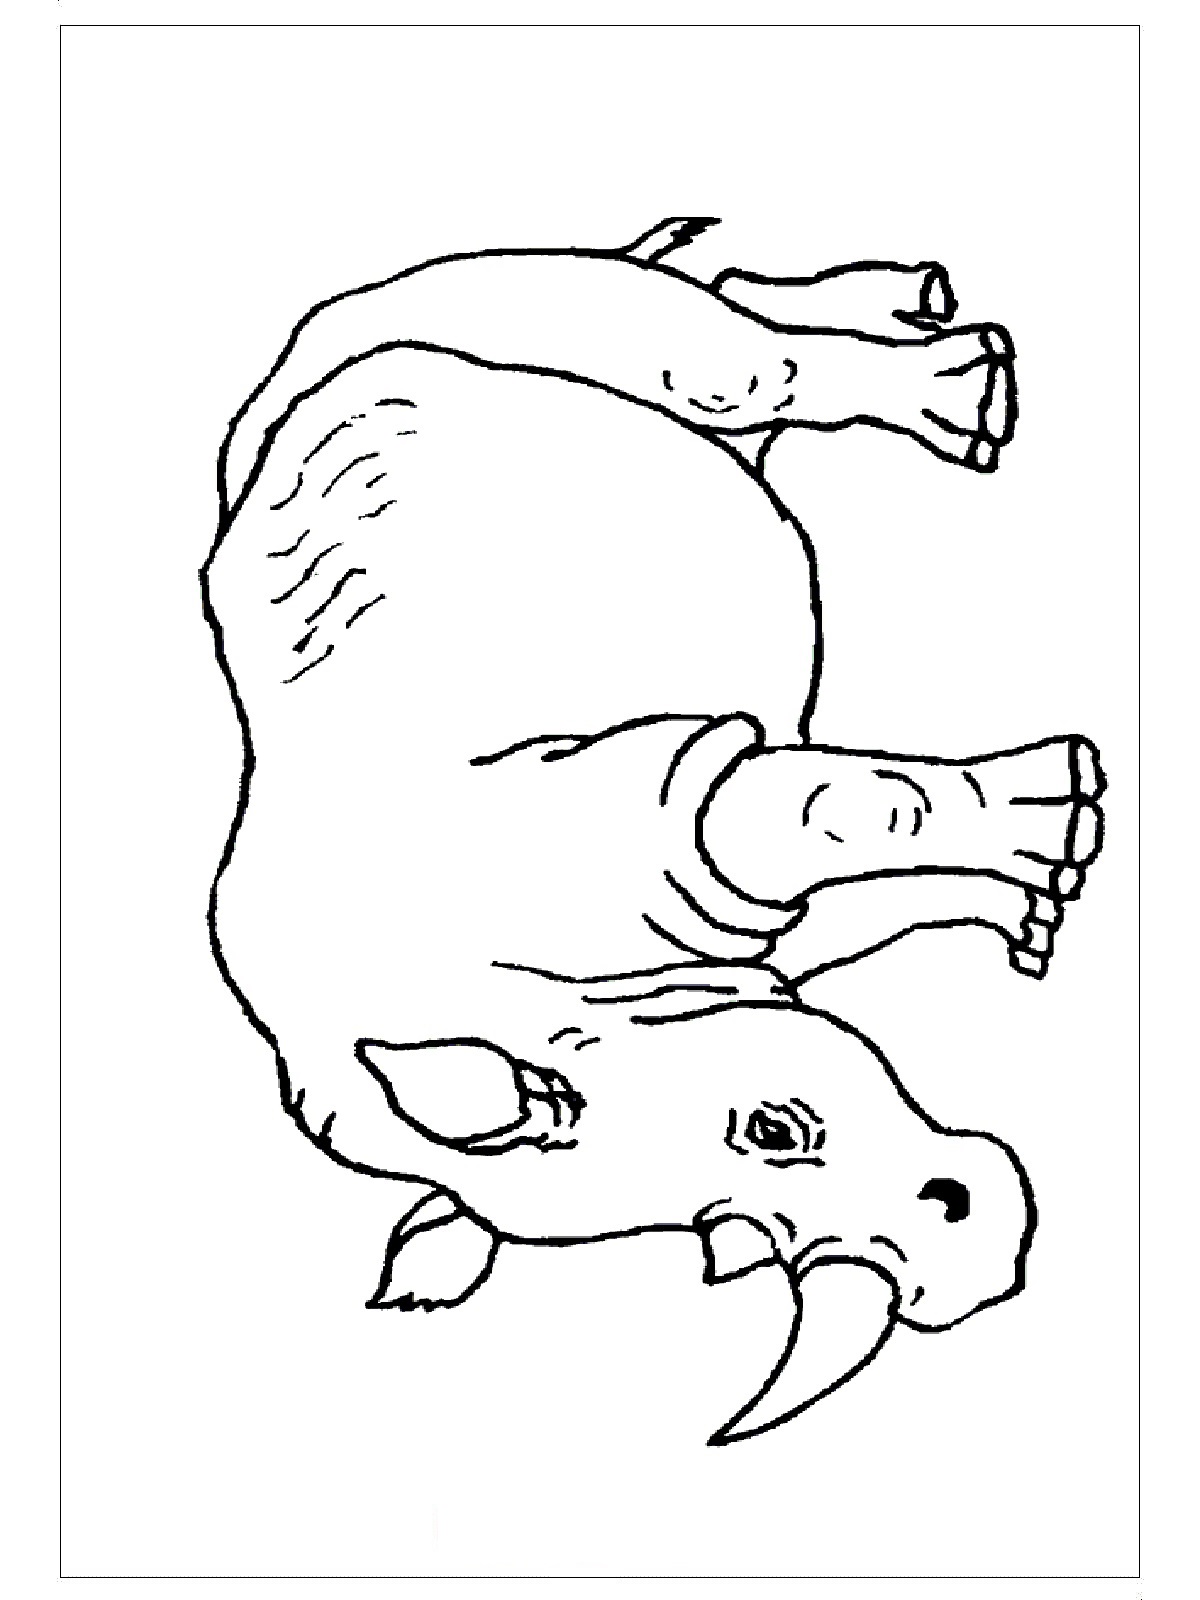 Rhino coloring pages - Preschool Crafts